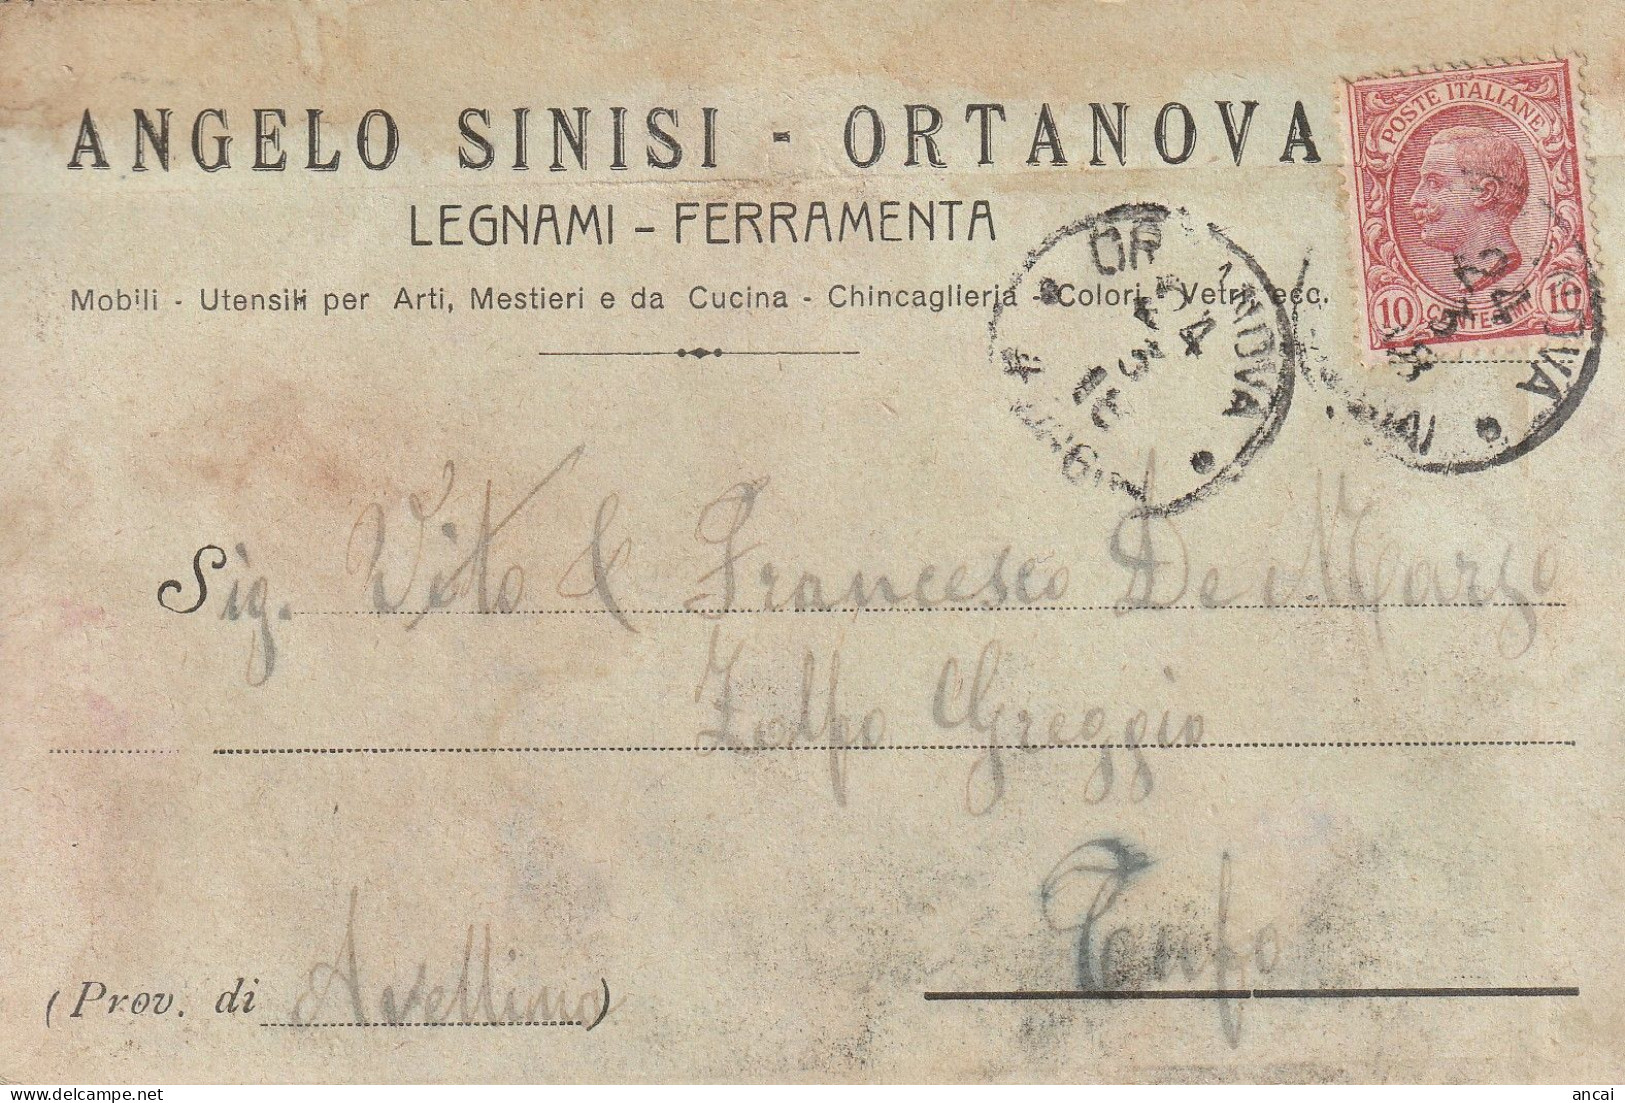 Italy. A215. Ortanova. 1918. Cartolina Postale PUBBLICITARIA ... Legnami - Ferramenta .... - Marcophilia